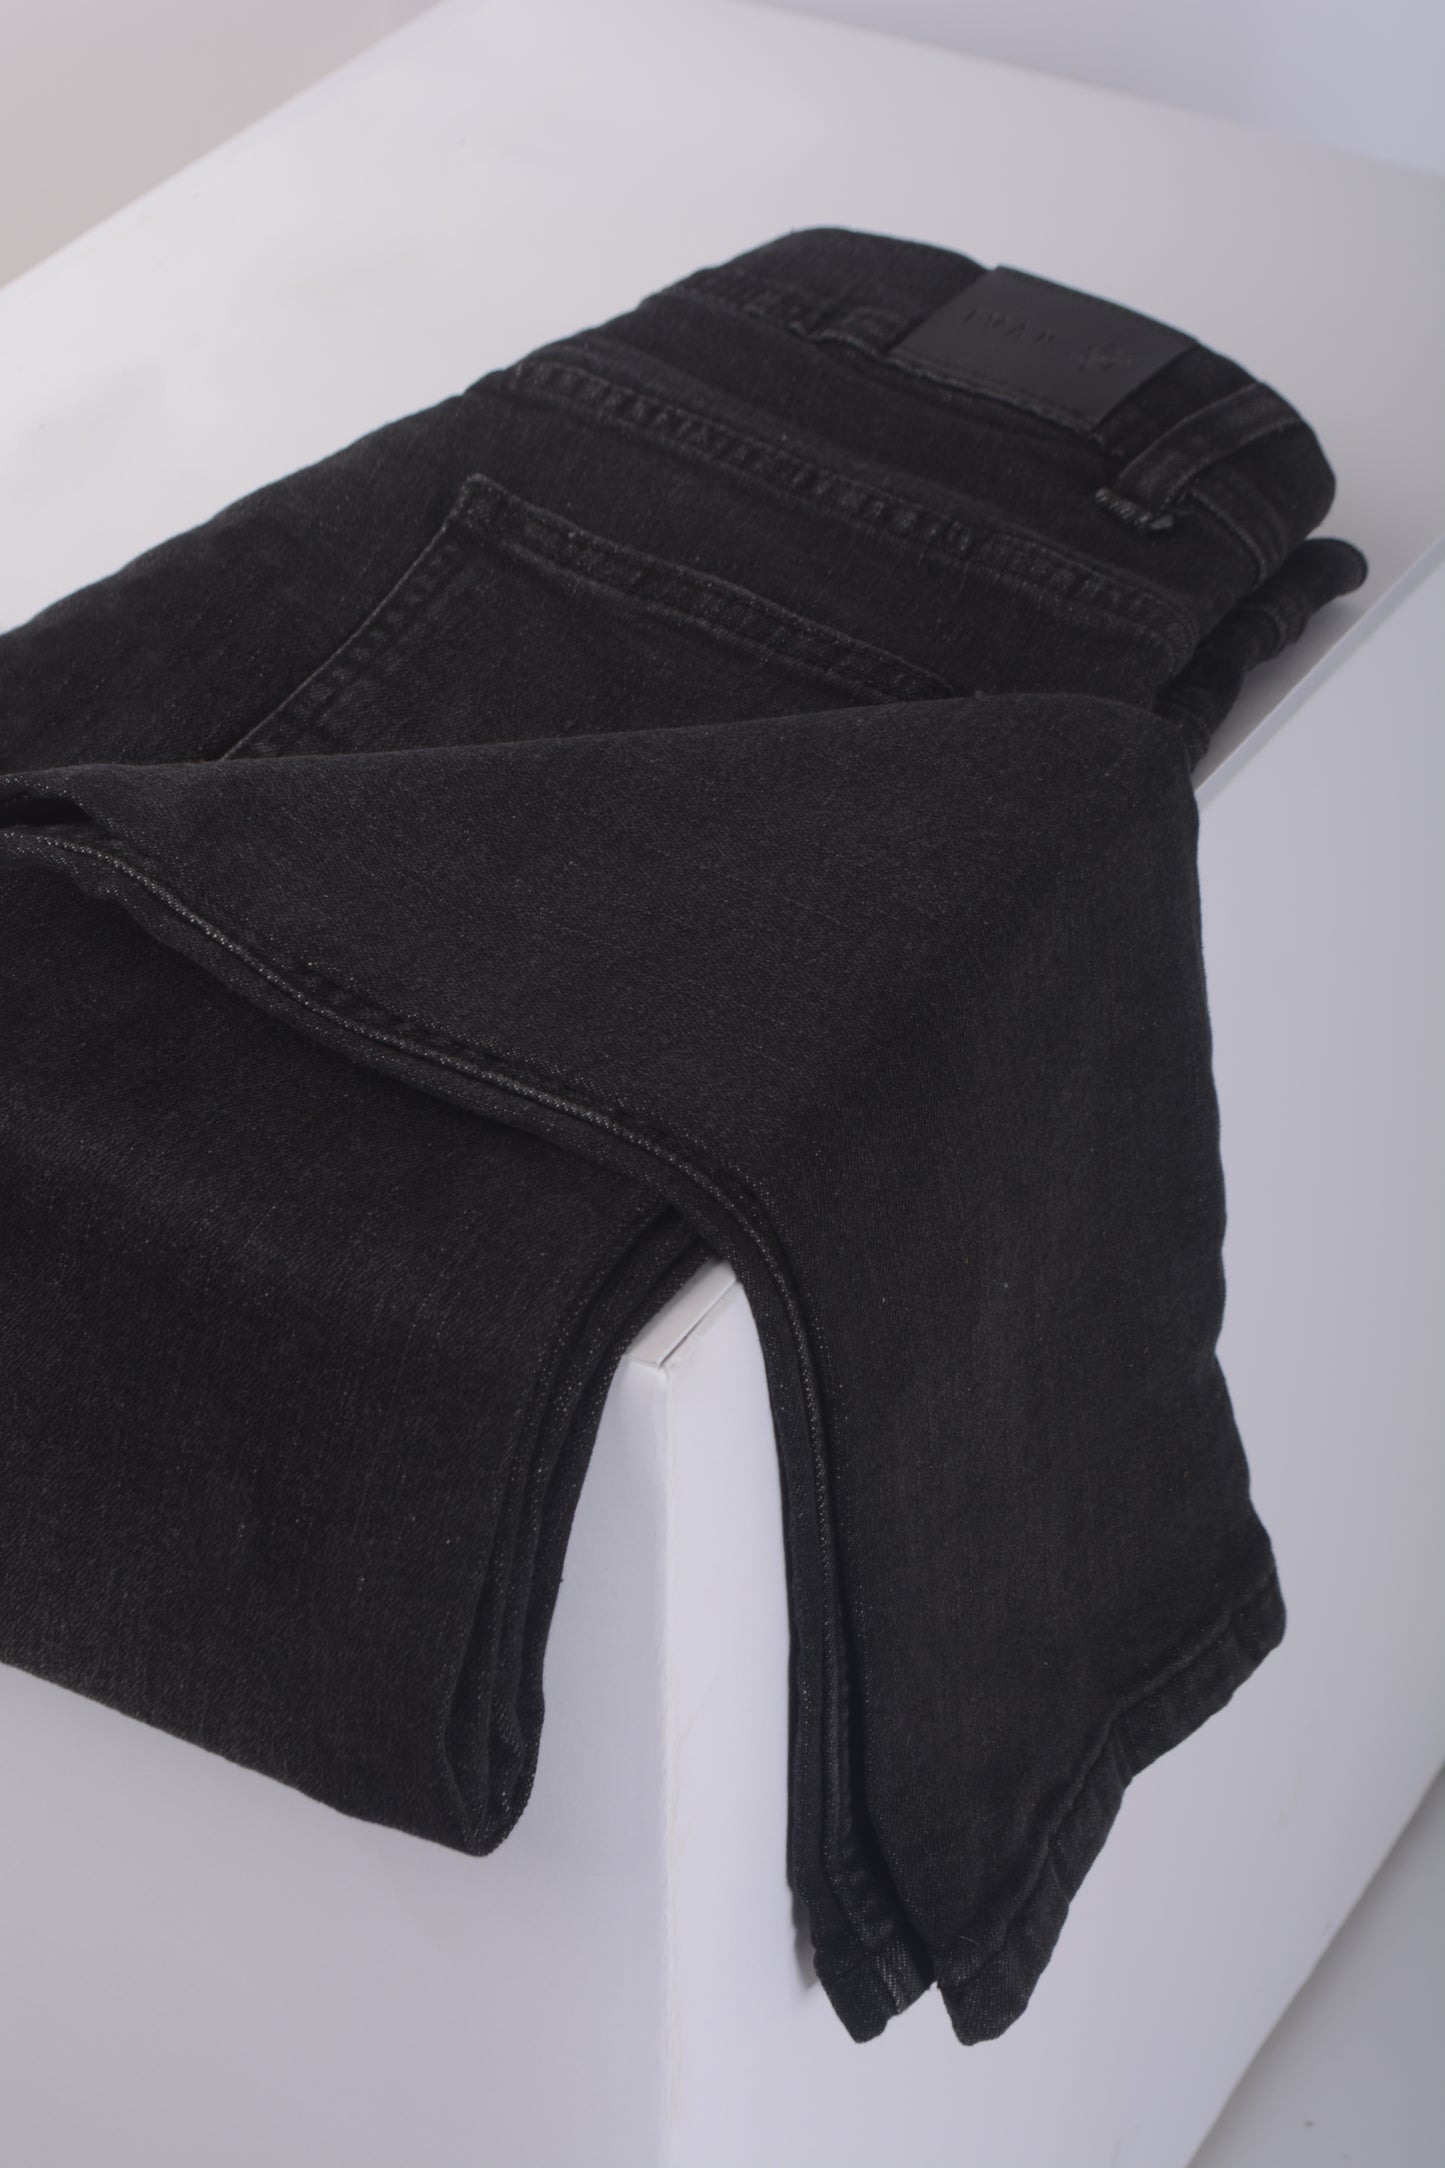 IVAR® Black Denim Jeans